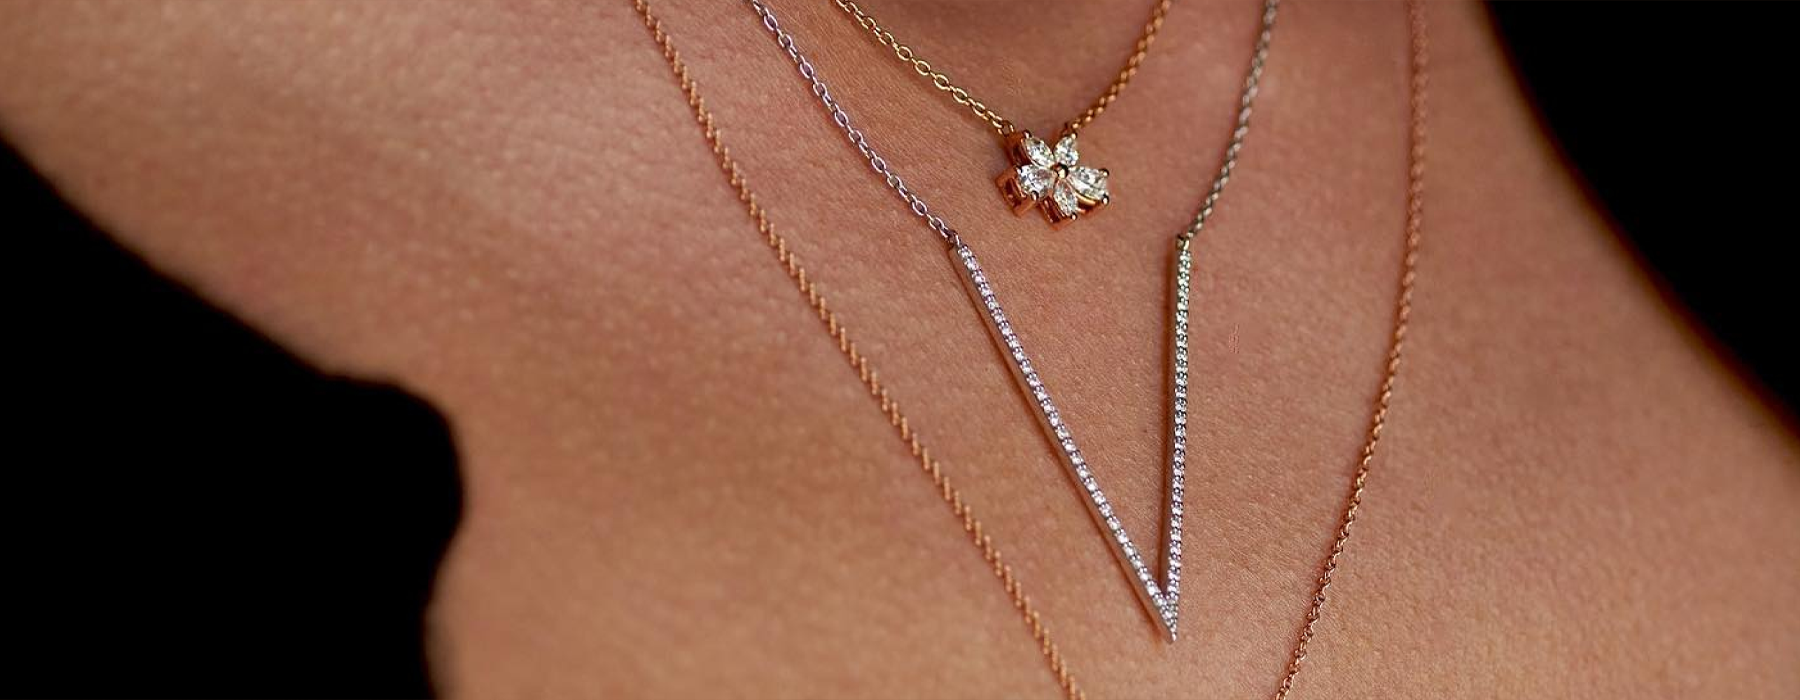 Shine Bright with Diamond Jewelry | Rollands Jewelers Libertyville, IL